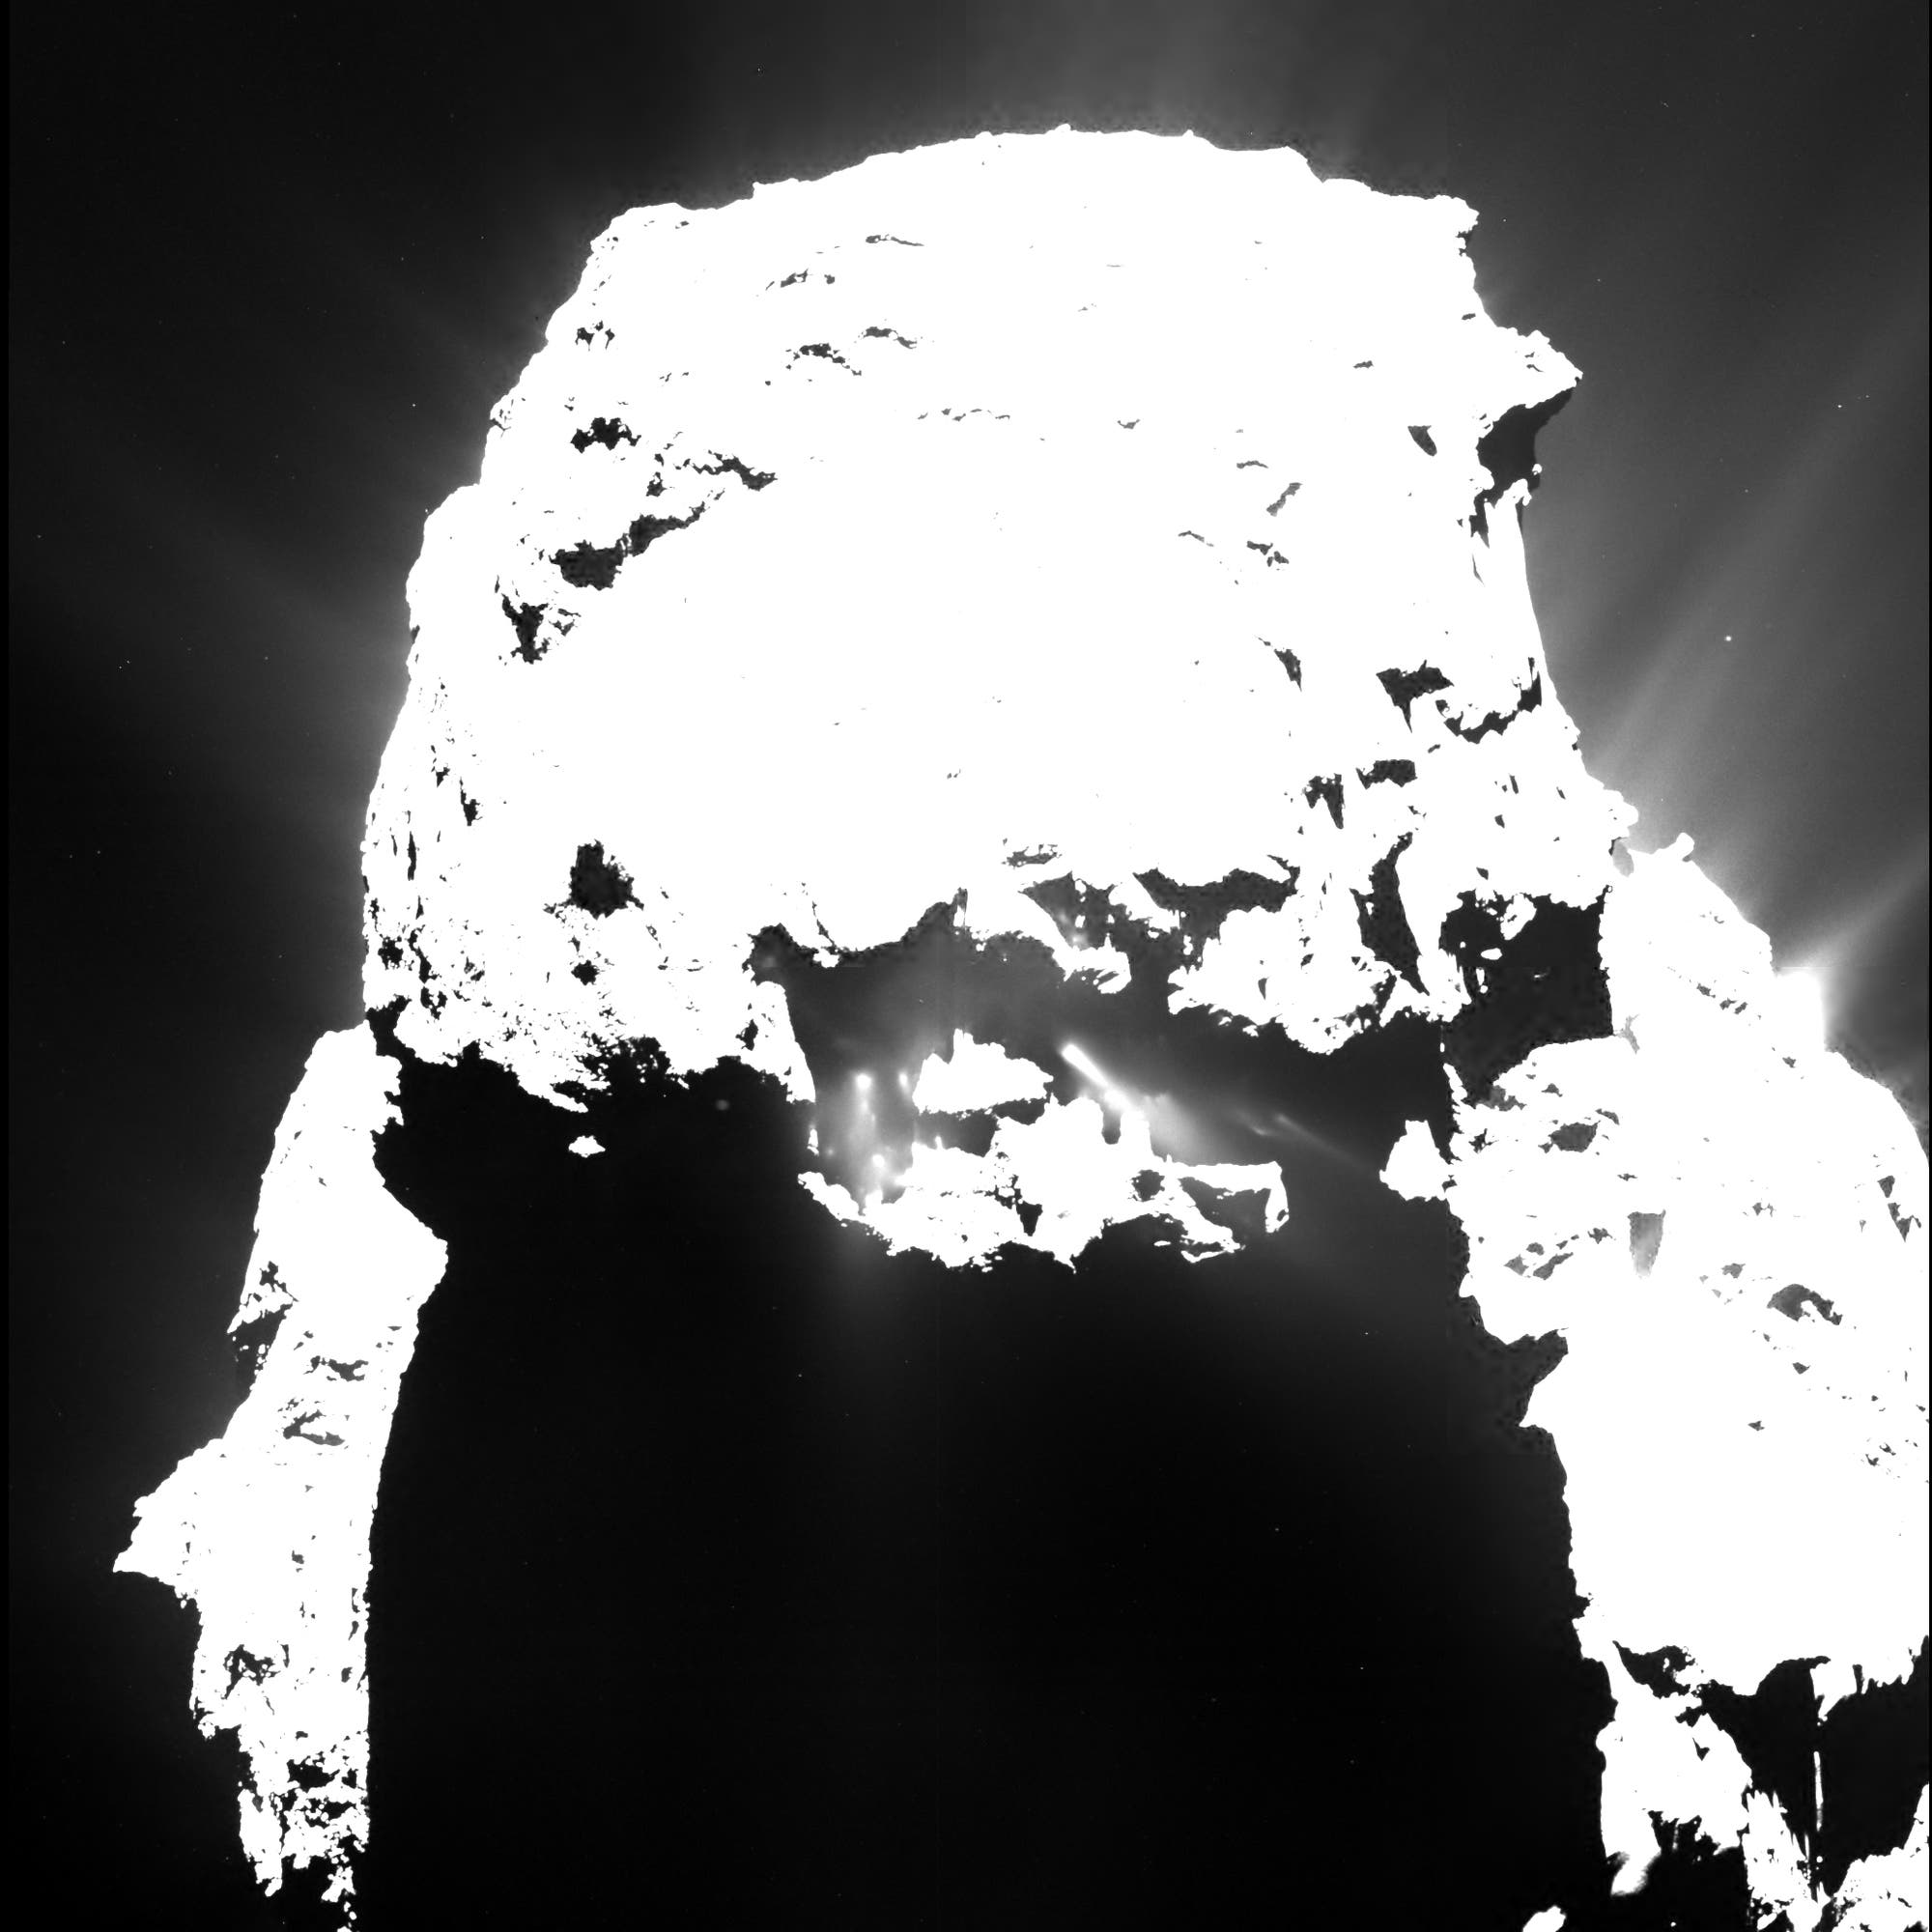 Komet 67P am 25. April 2015 mit Gasausbrüchen